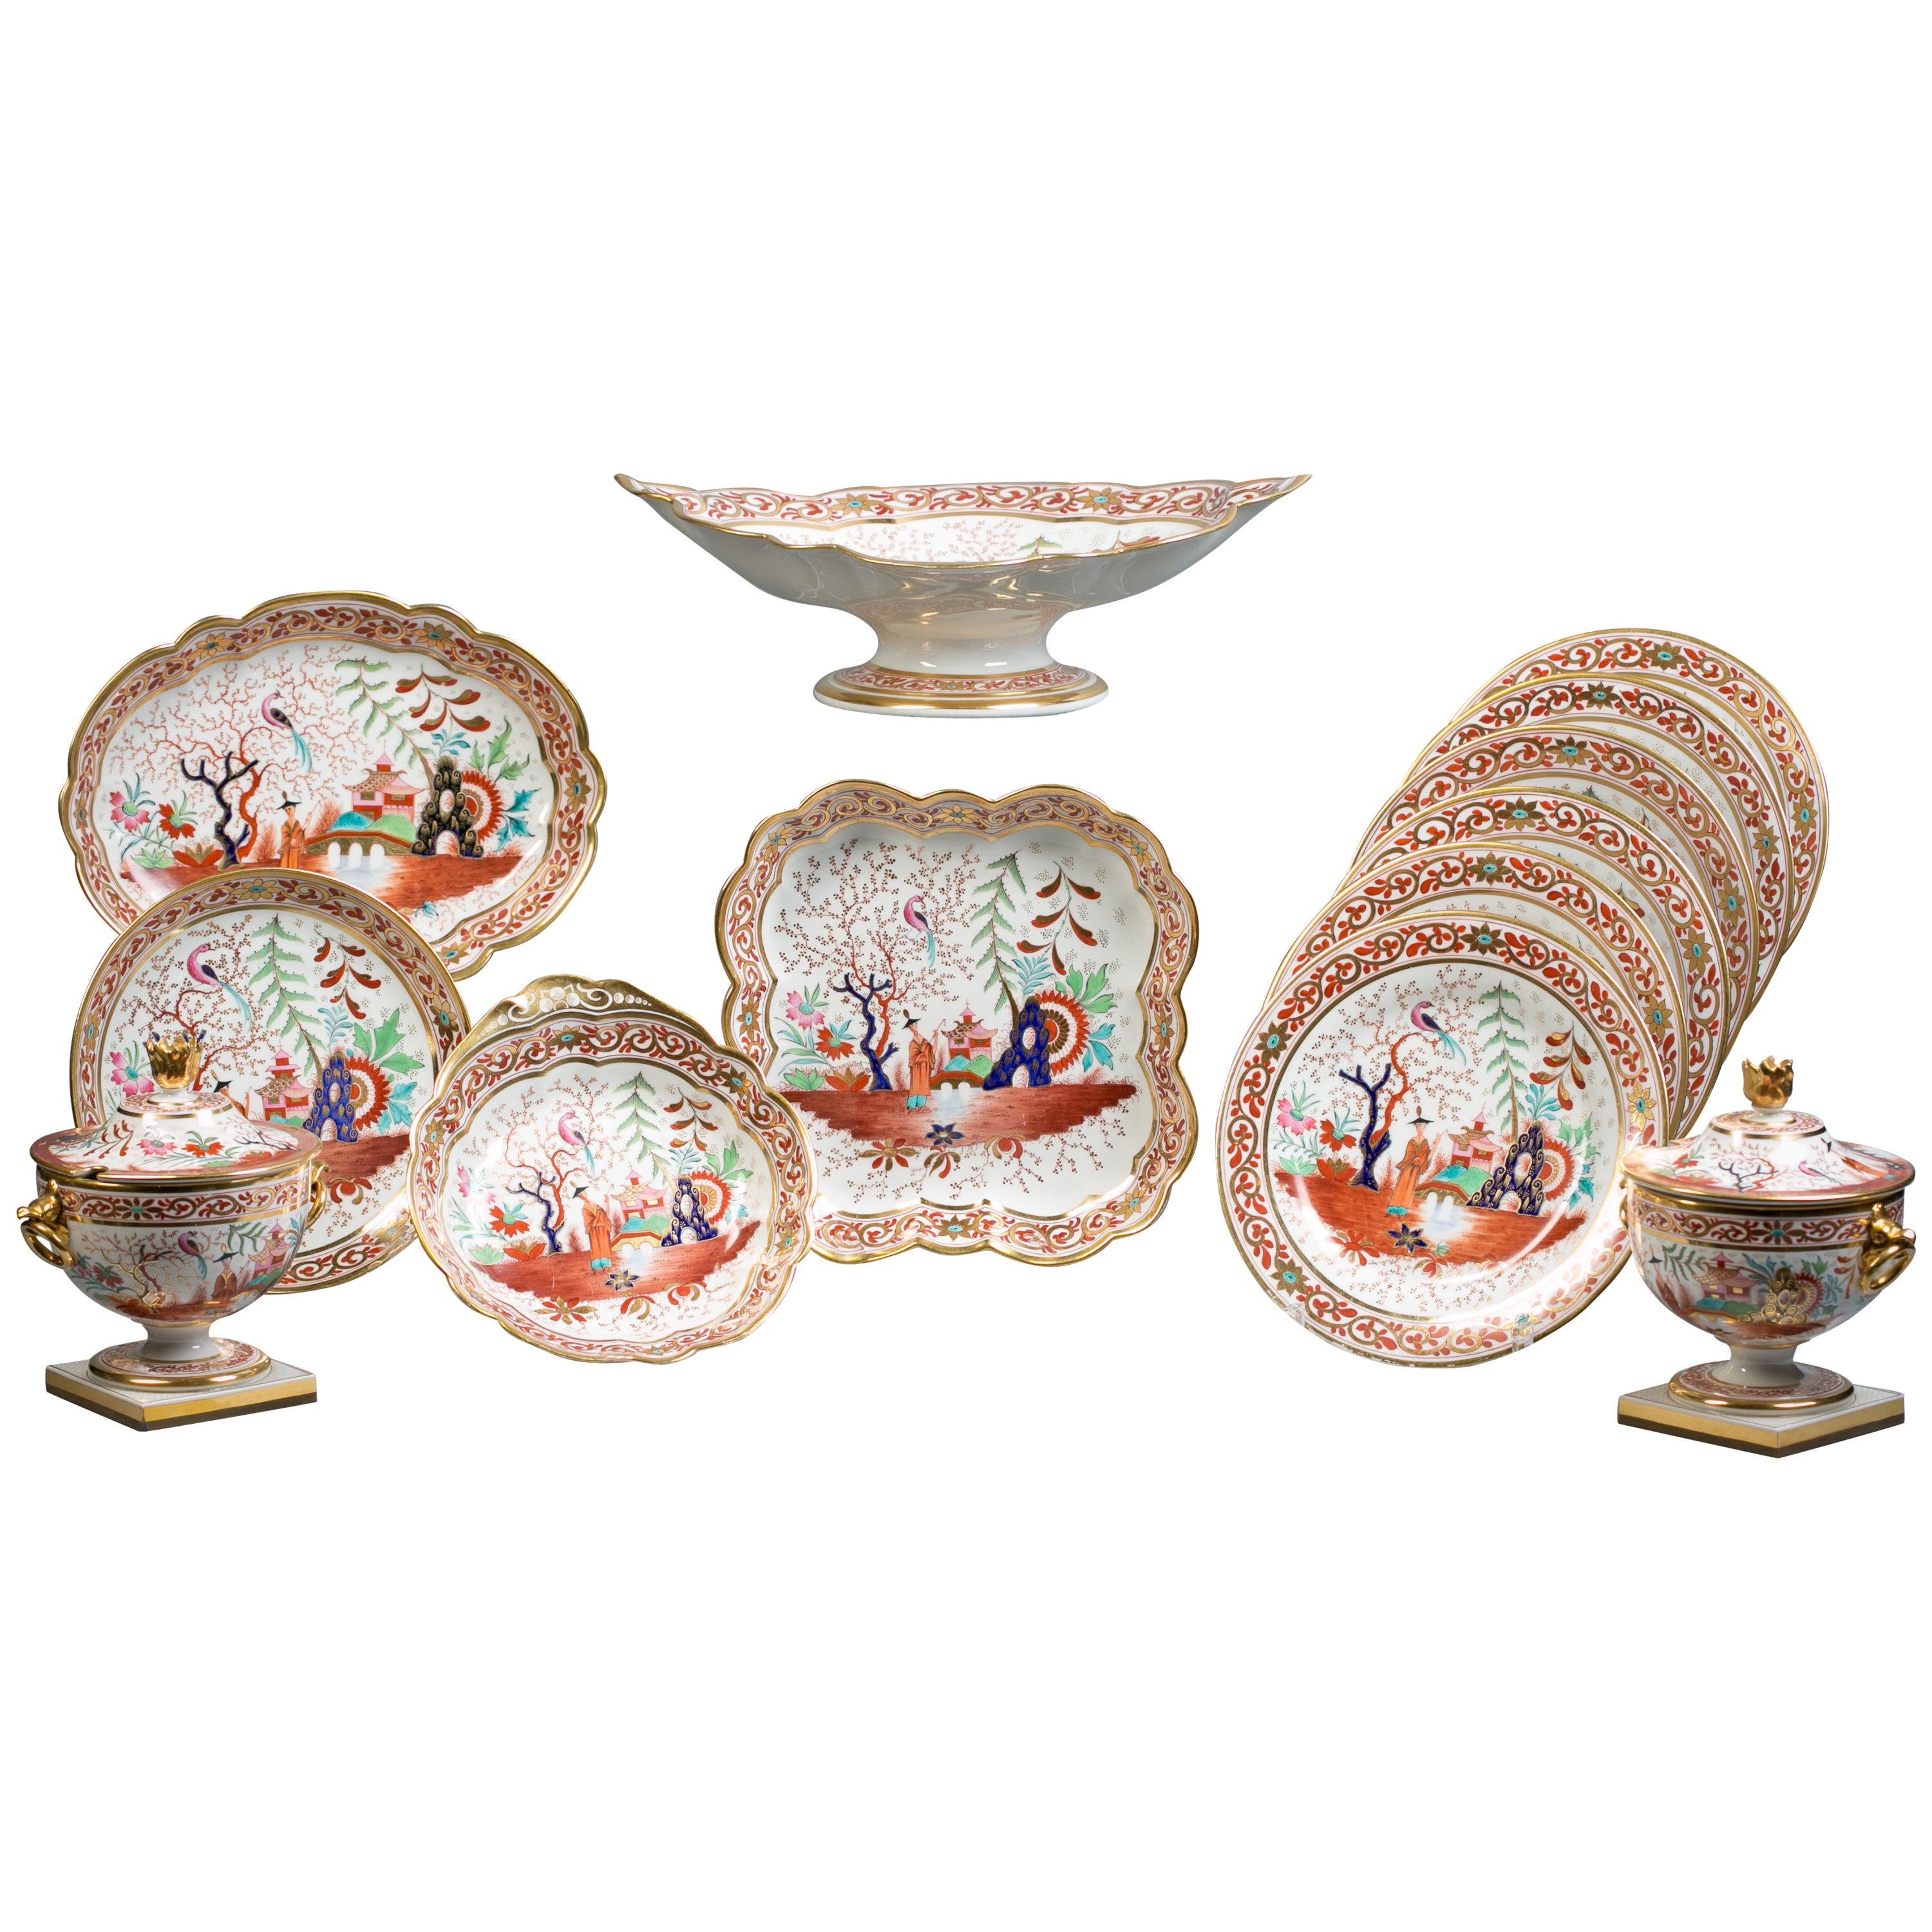 English Flight Barr and Barr Porcelain Dessert Service, circa 1815